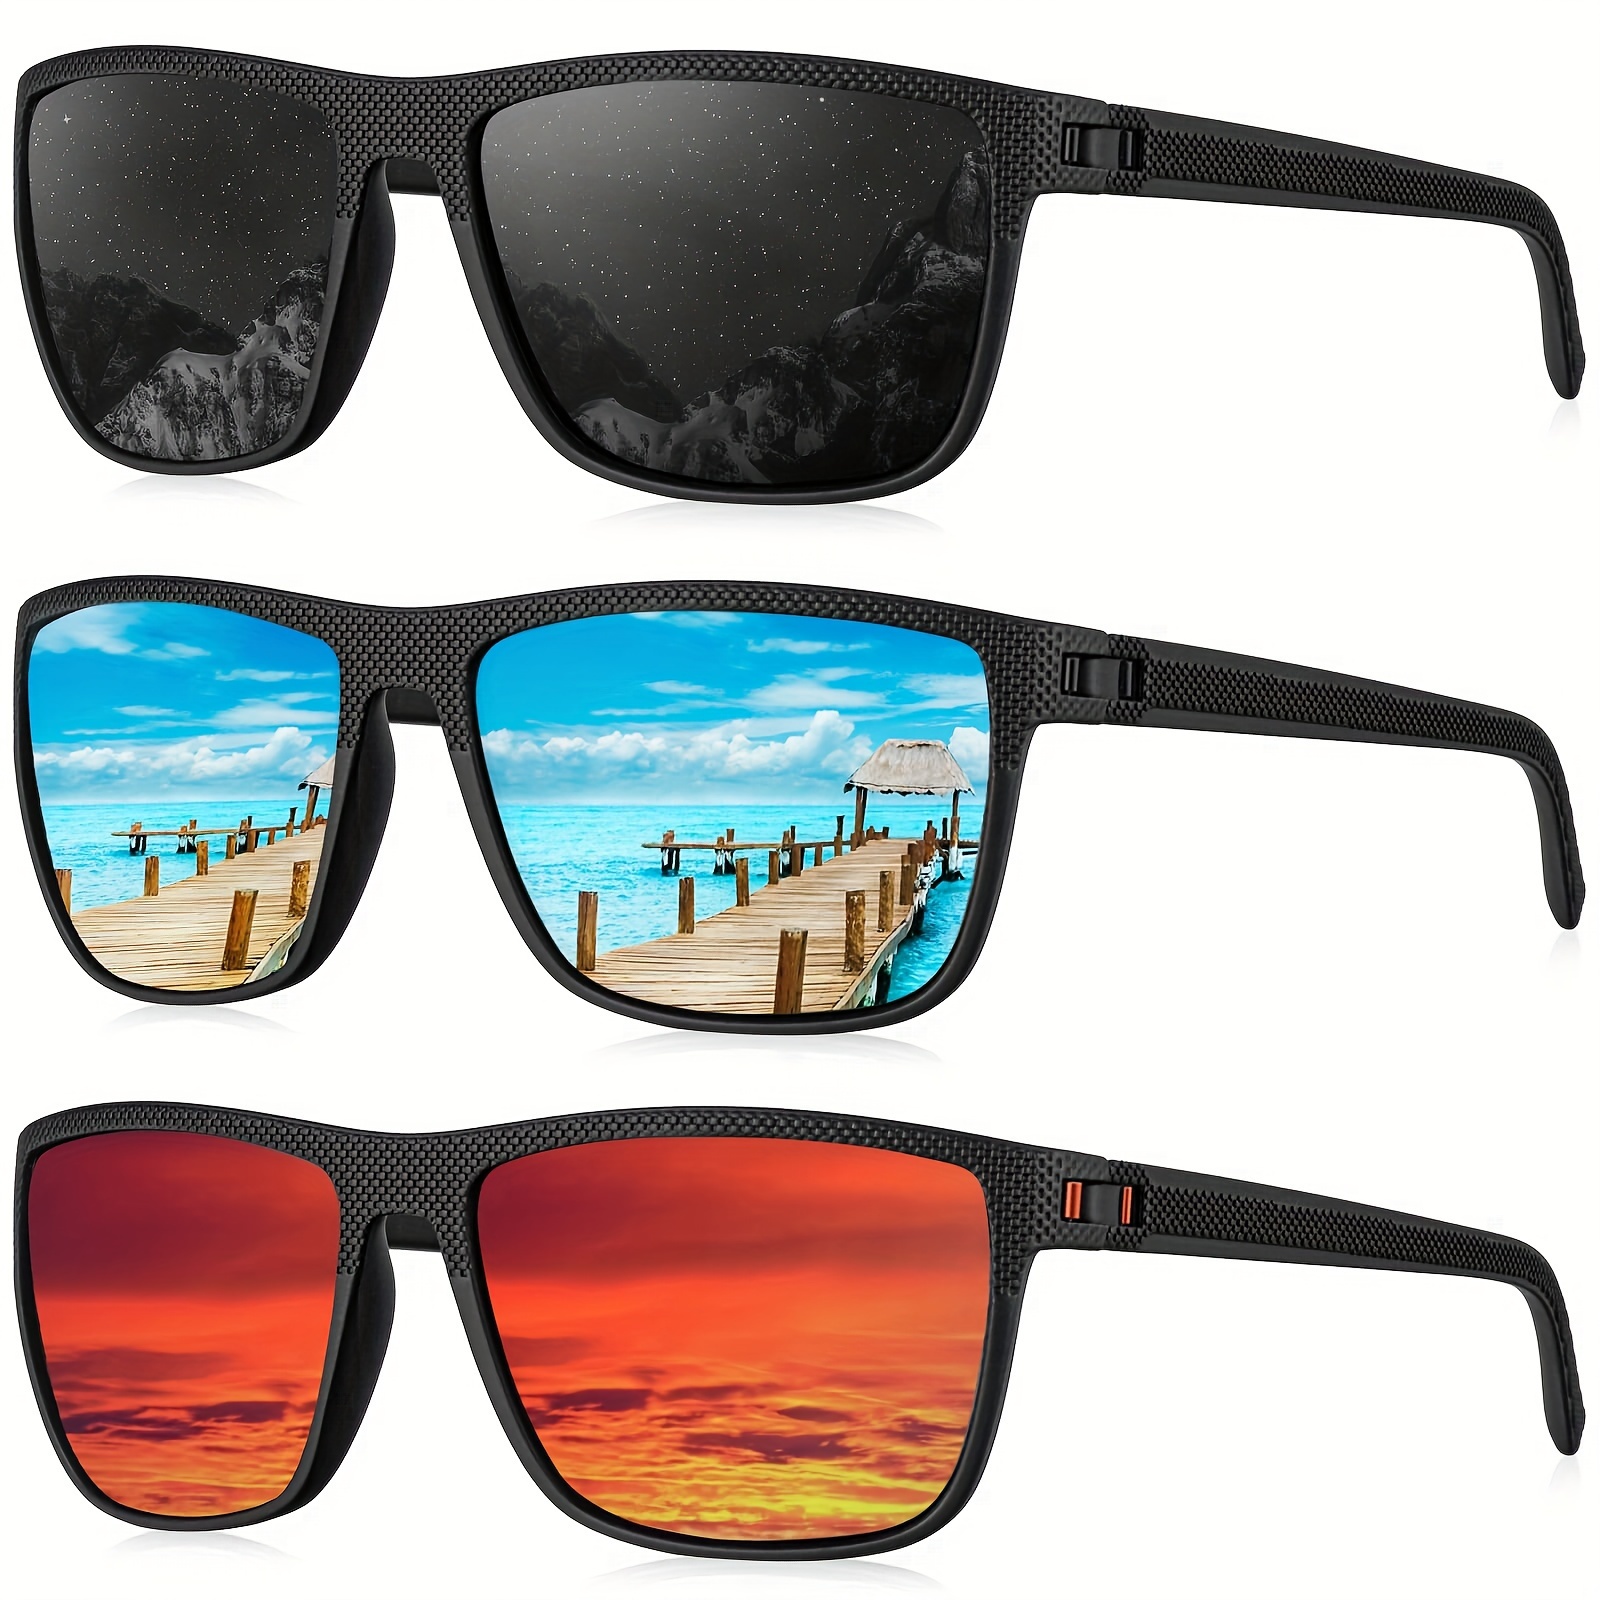 

Mens Polarized Sunglasses Women, Lightweight Classic Square Mens Sports Sunglasses Uv Protection For Driving Running Fishing Golfing Climbing